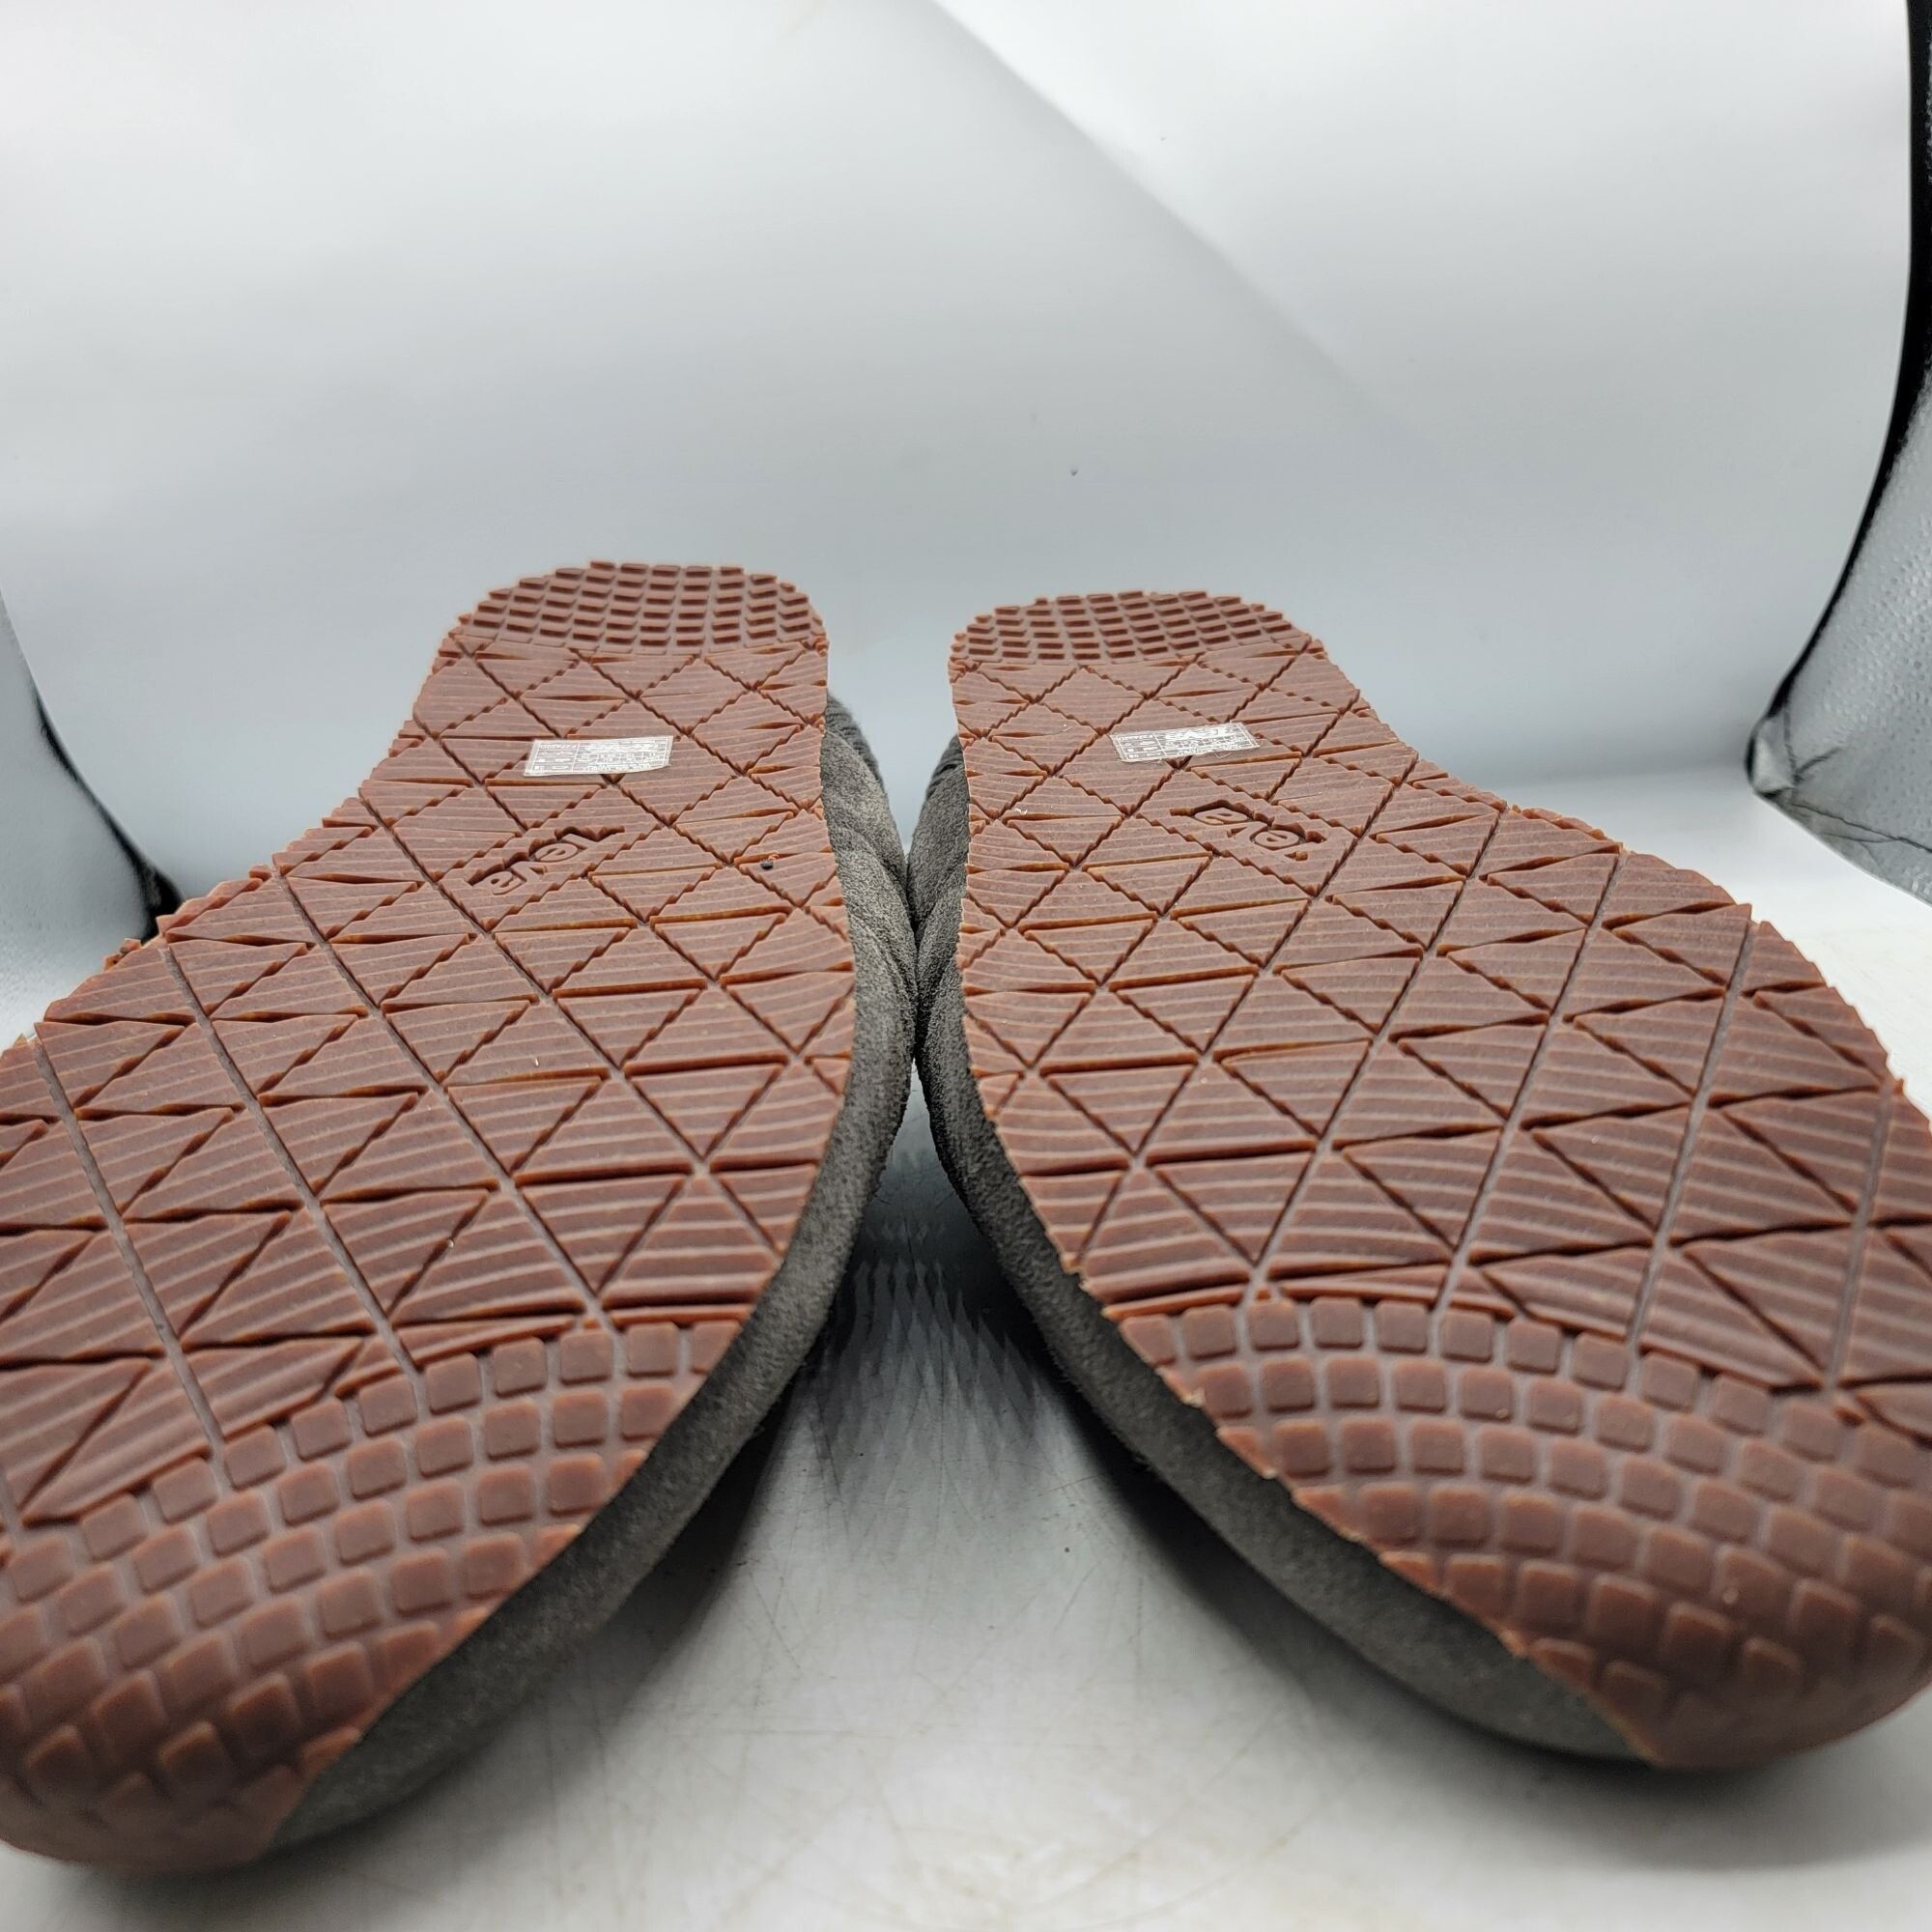 Teva Teva ReEmber Plushed Mens 11 Gray Slipper Shoes Comfort Line Size US 11 / EU 44 - 13 Preview